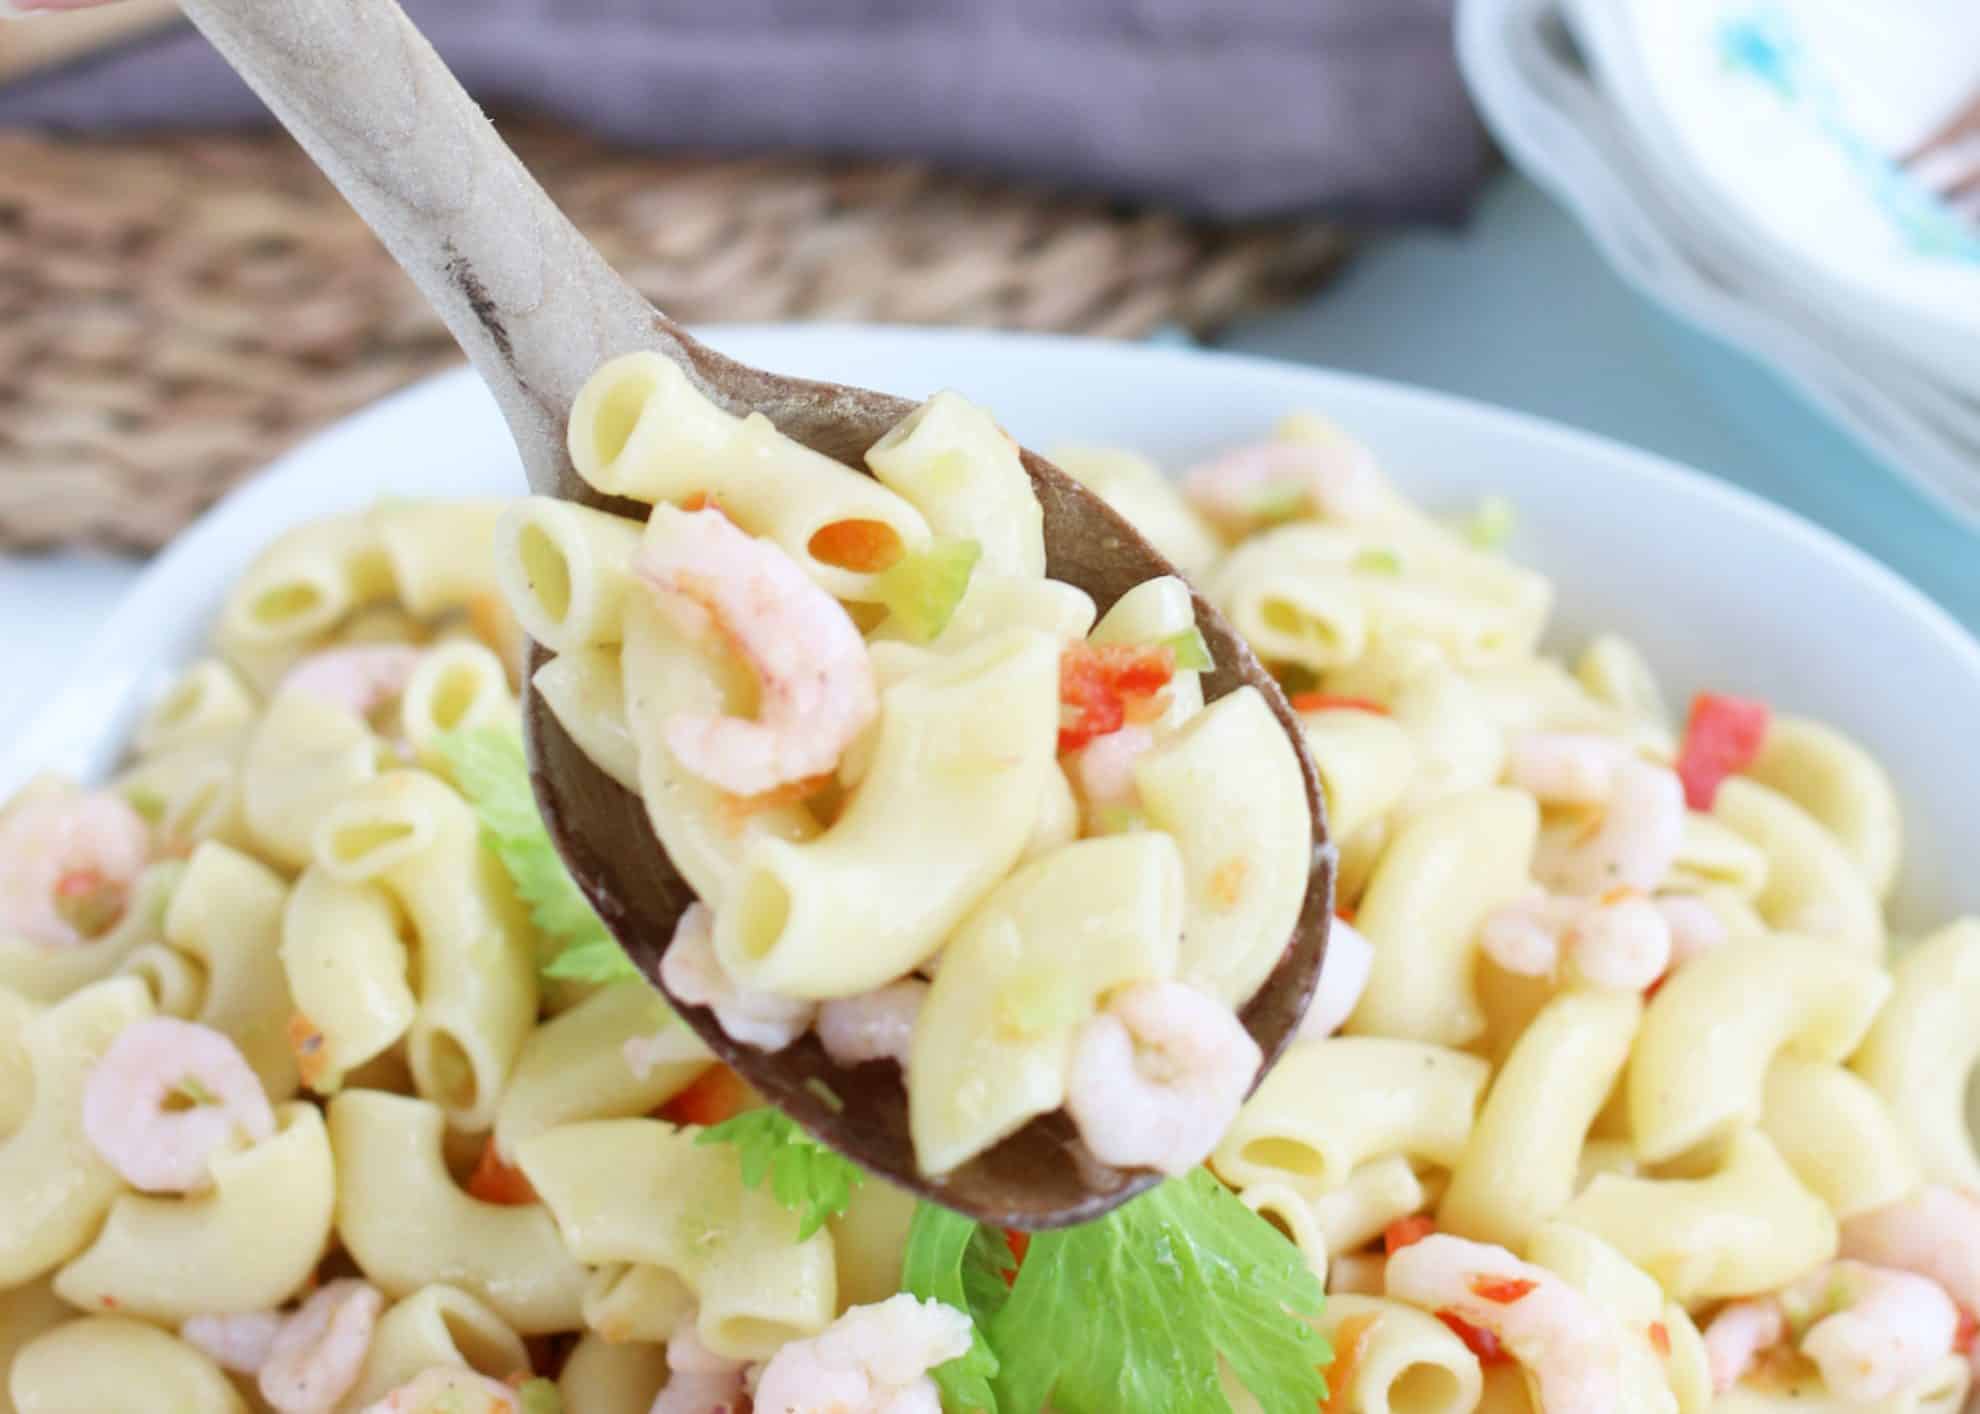 spoonful of pasta salad